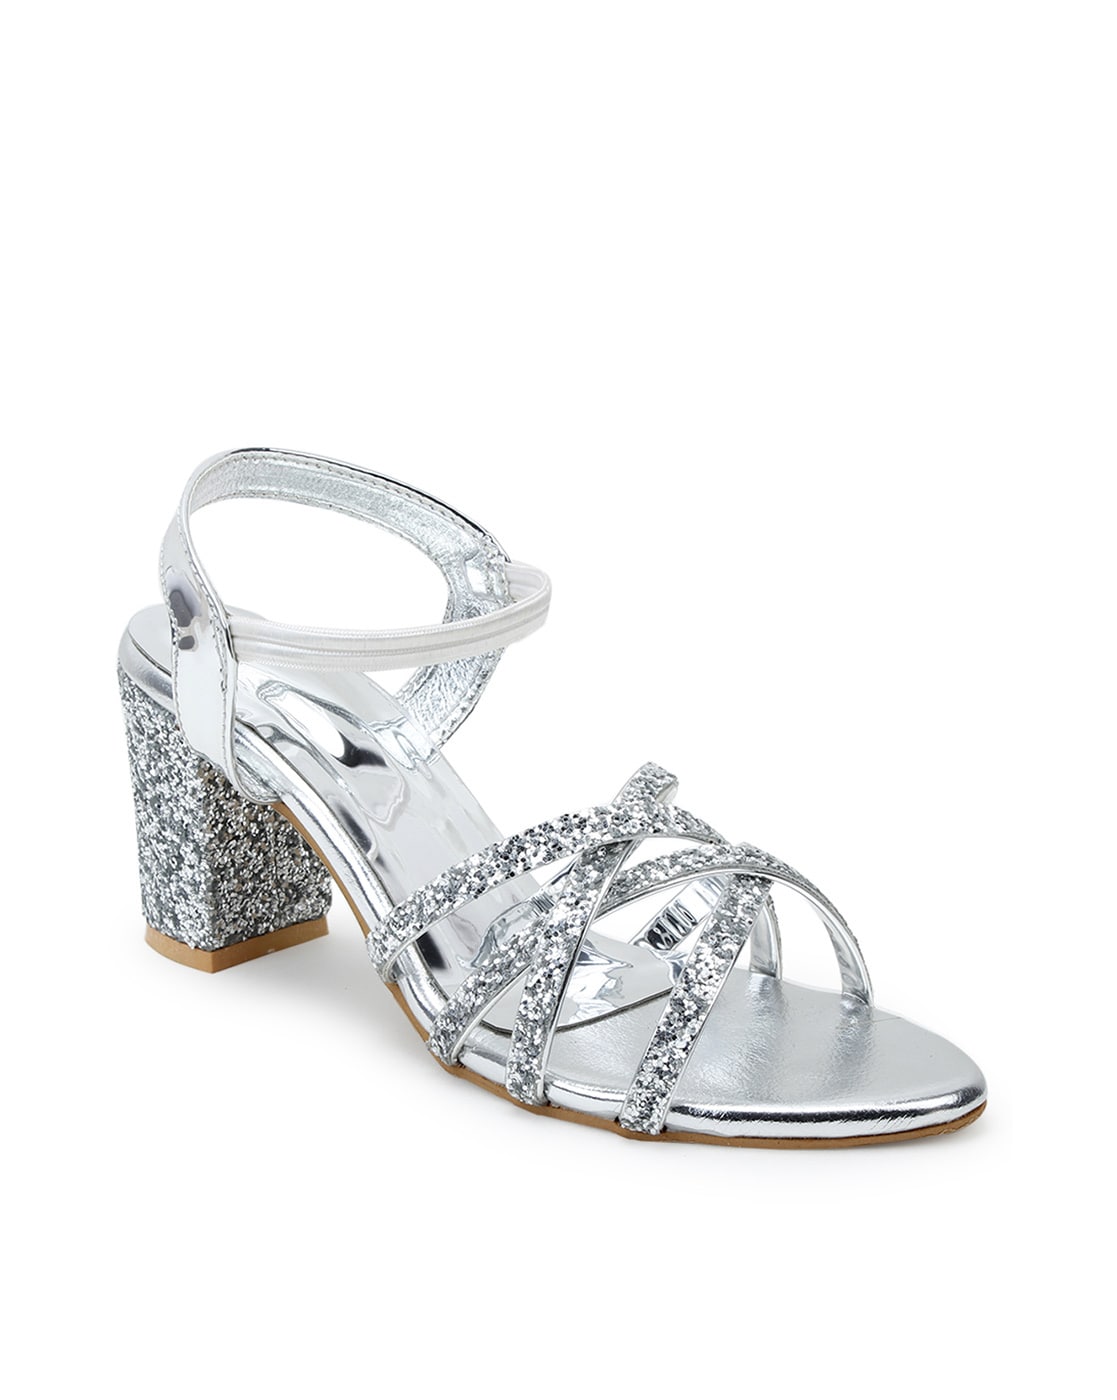 Buy Flat n Heels Womens Silver Sandals FnH 5815SIL at Amazonin